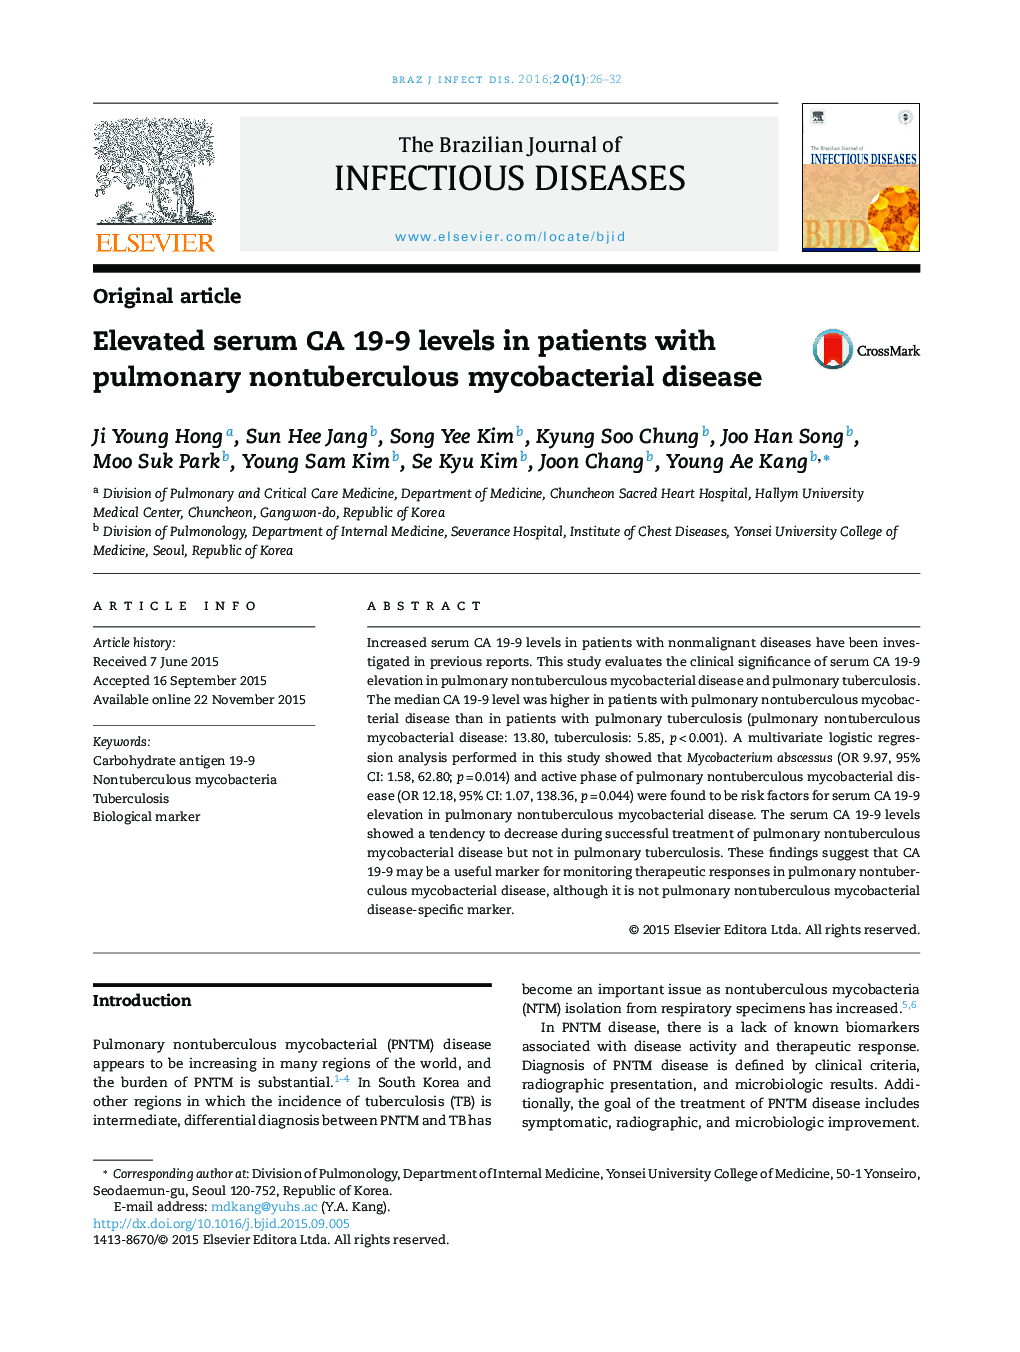 Elevated serum CA 19-9 levels in patients with pulmonary nontuberculous mycobacterial disease